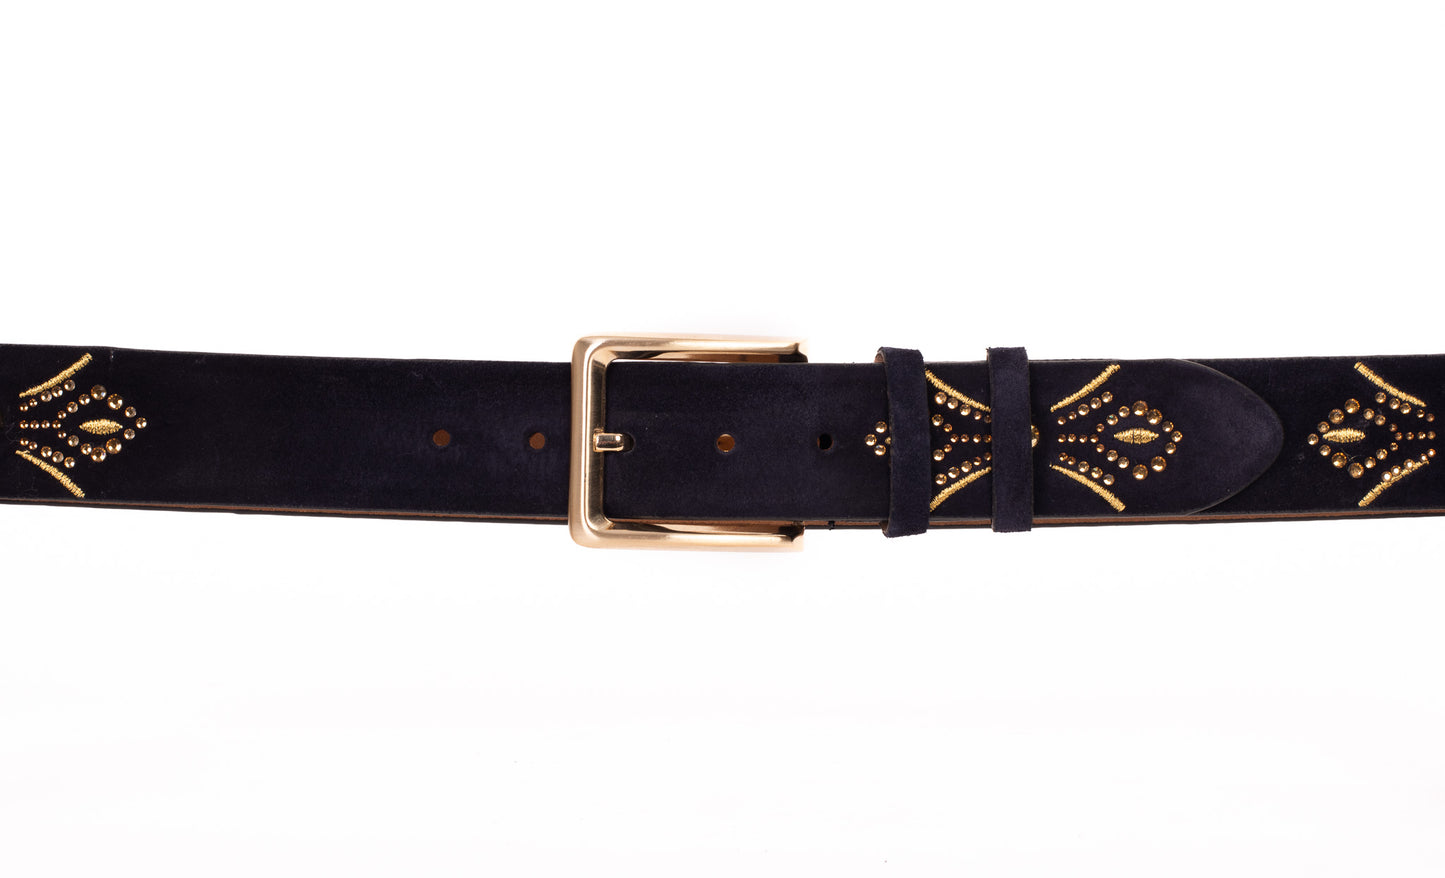 The Lazio Navy Blue Suede Leather Belt